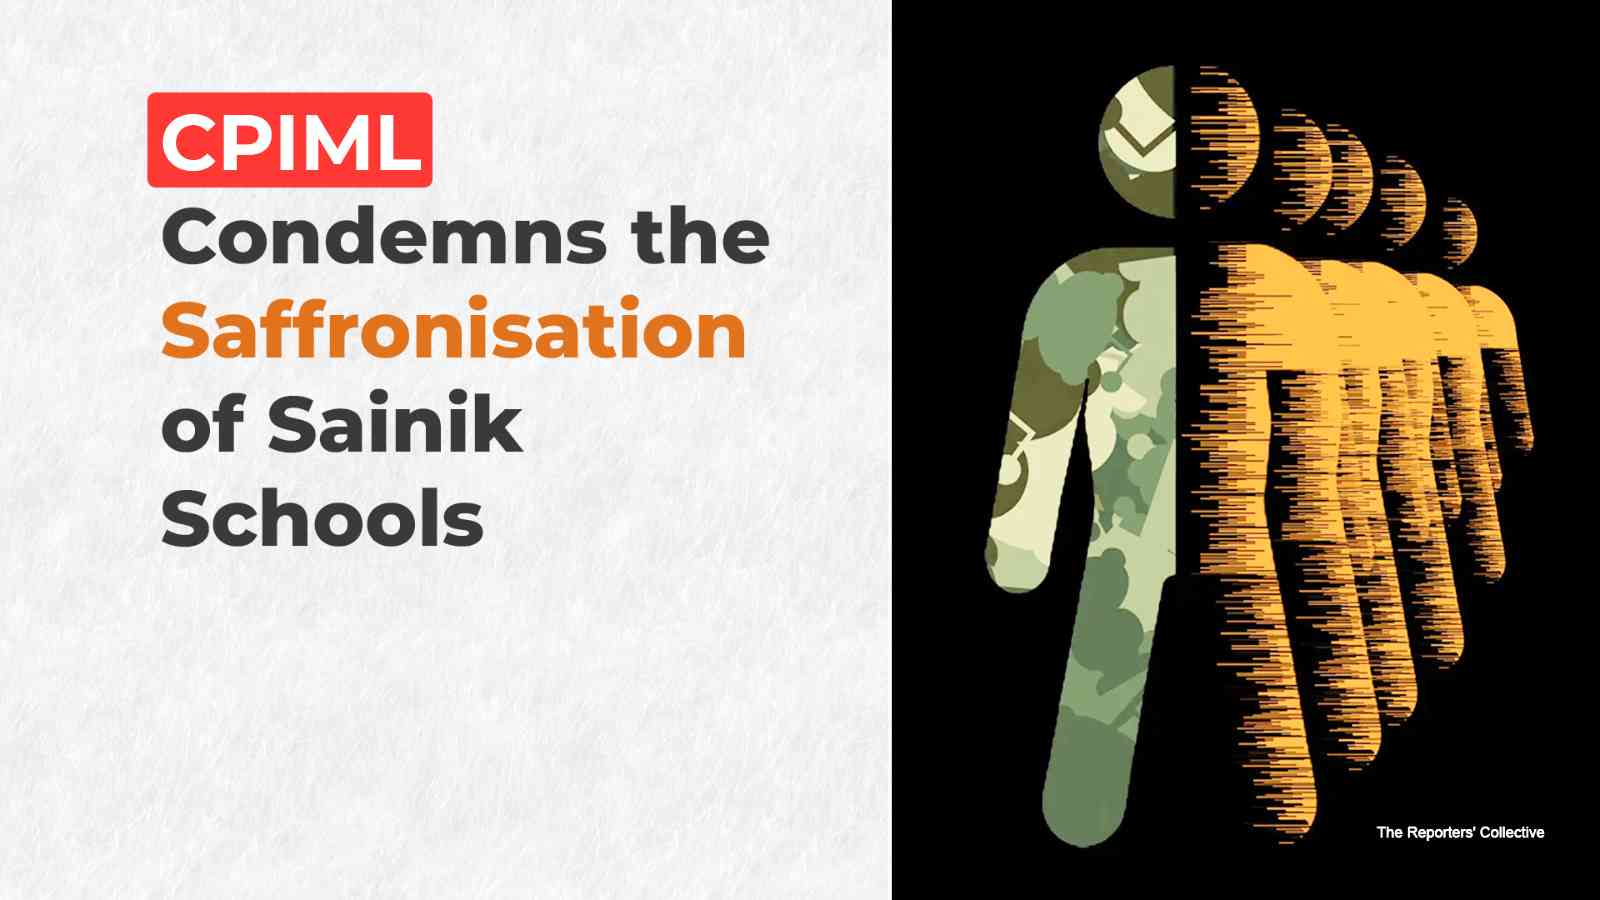 CPIML Condemns the Saffronisation of Sainik Schools